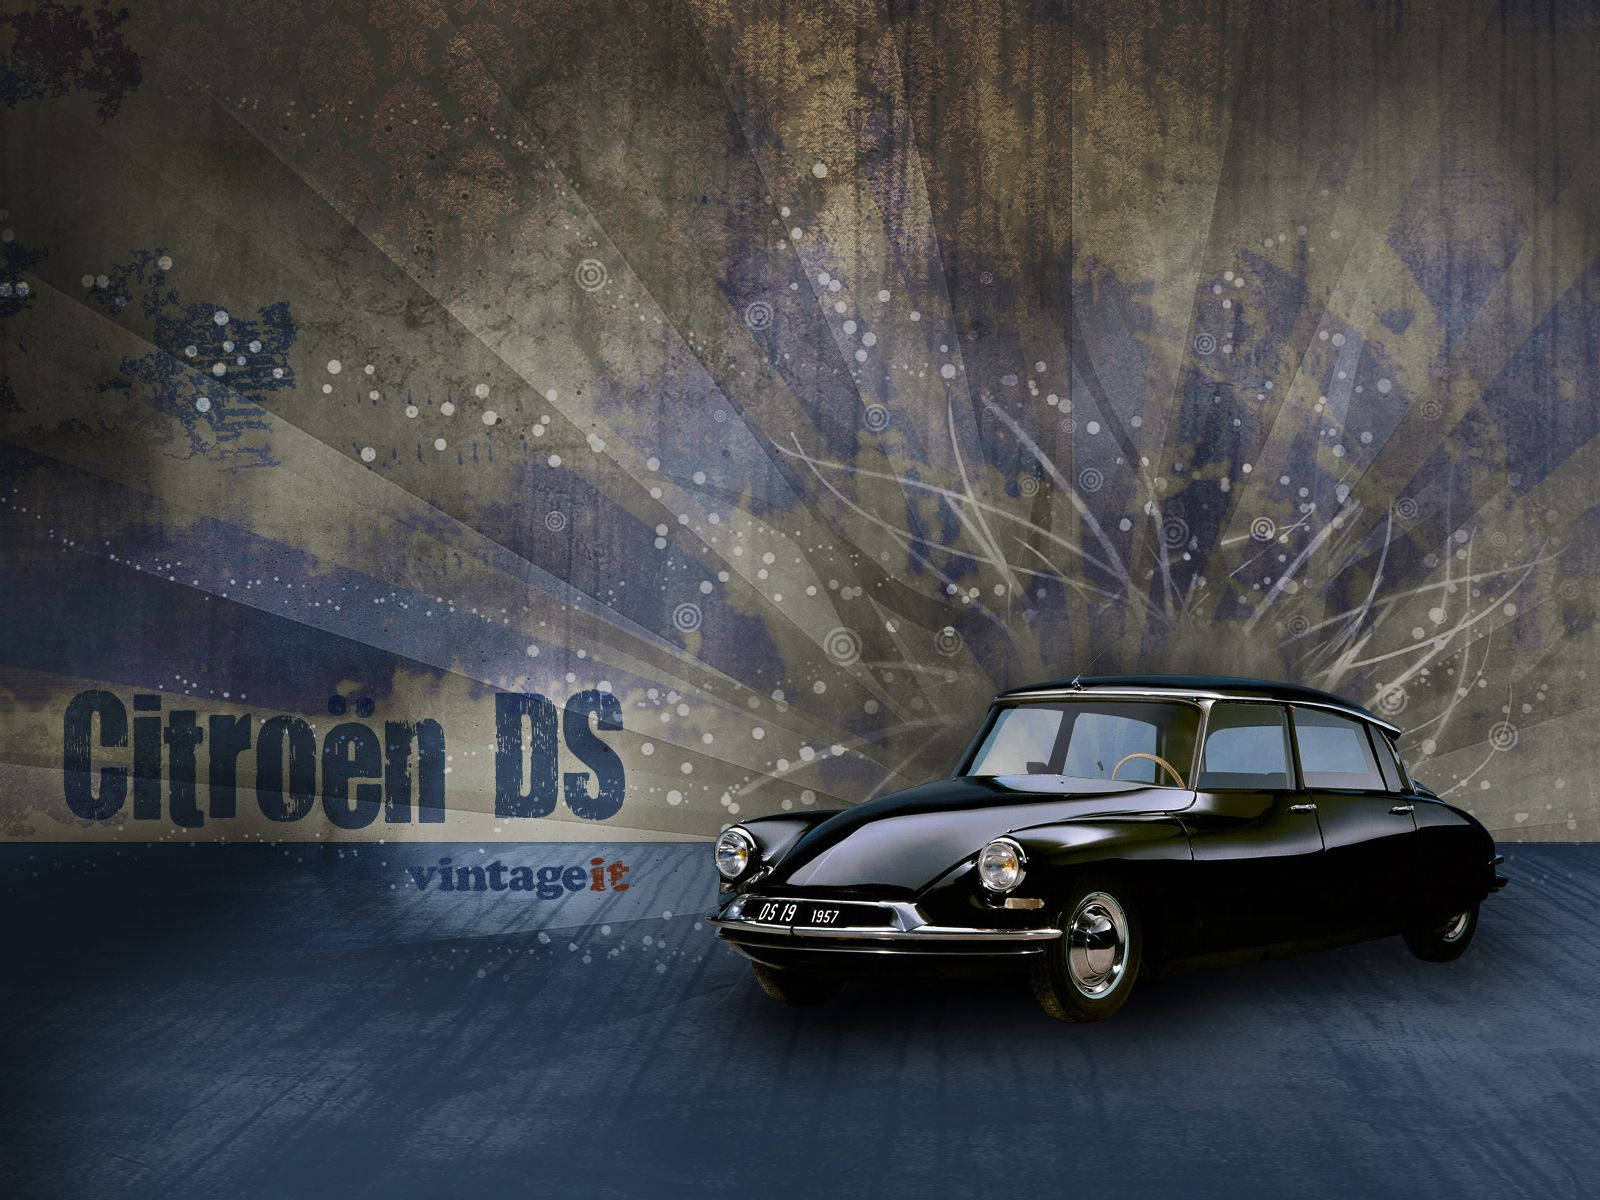 Vintage Citroen Ds Background